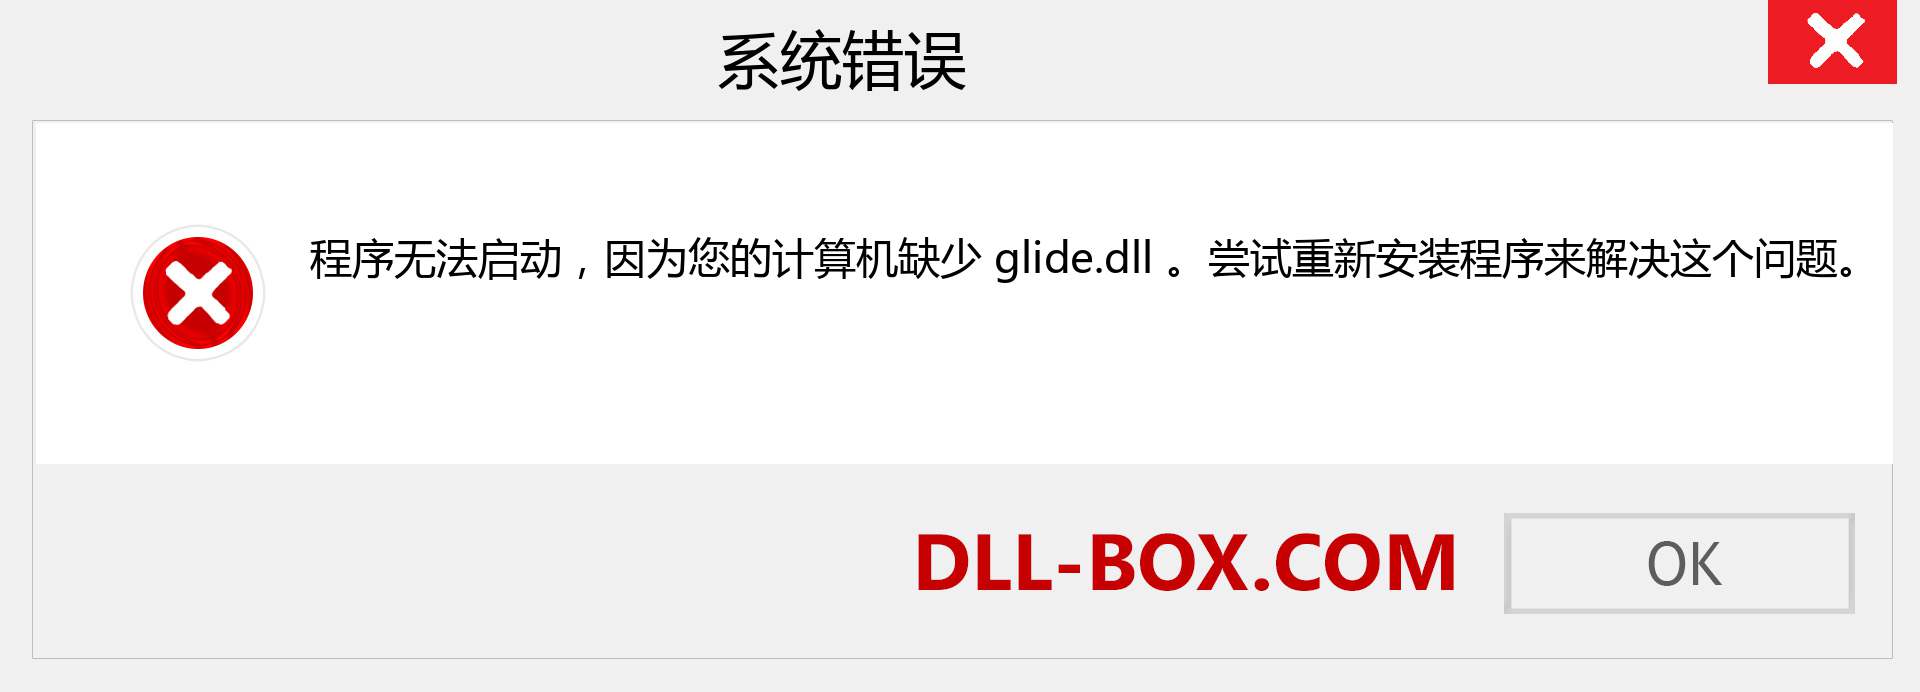 glide.dll 文件丢失？。 适用于 Windows 7、8、10 的下载 - 修复 Windows、照片、图像上的 glide dll 丢失错误